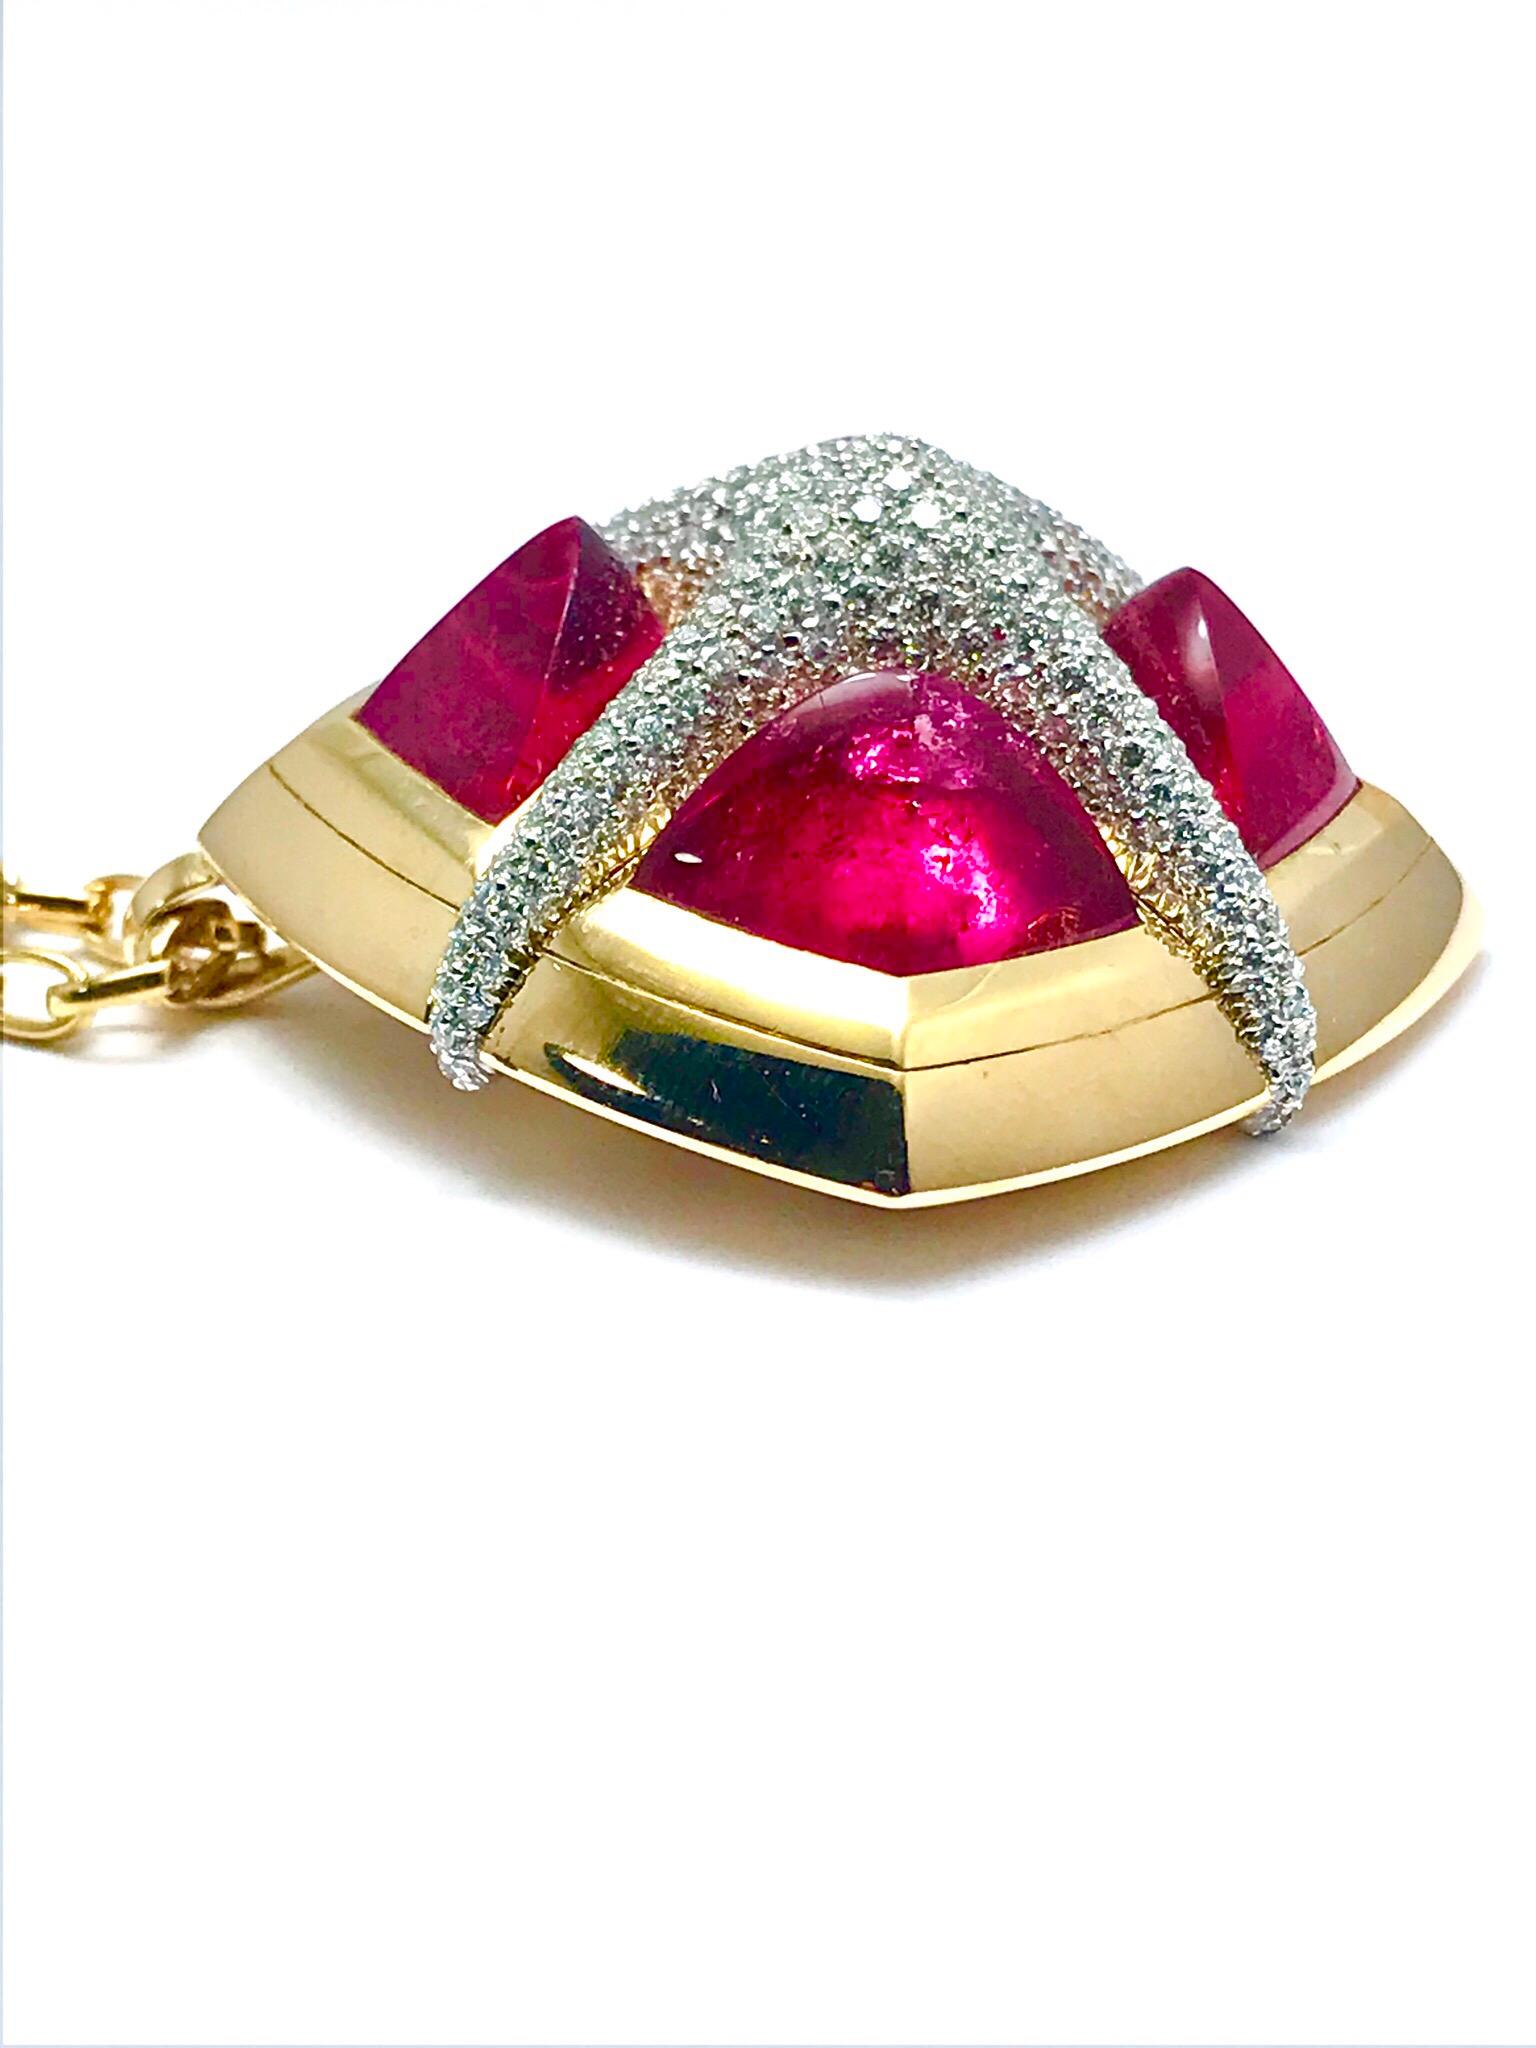 Valente Milano Rubelite Tourmaline and Pave Diamond Rose Gold Necklace 1